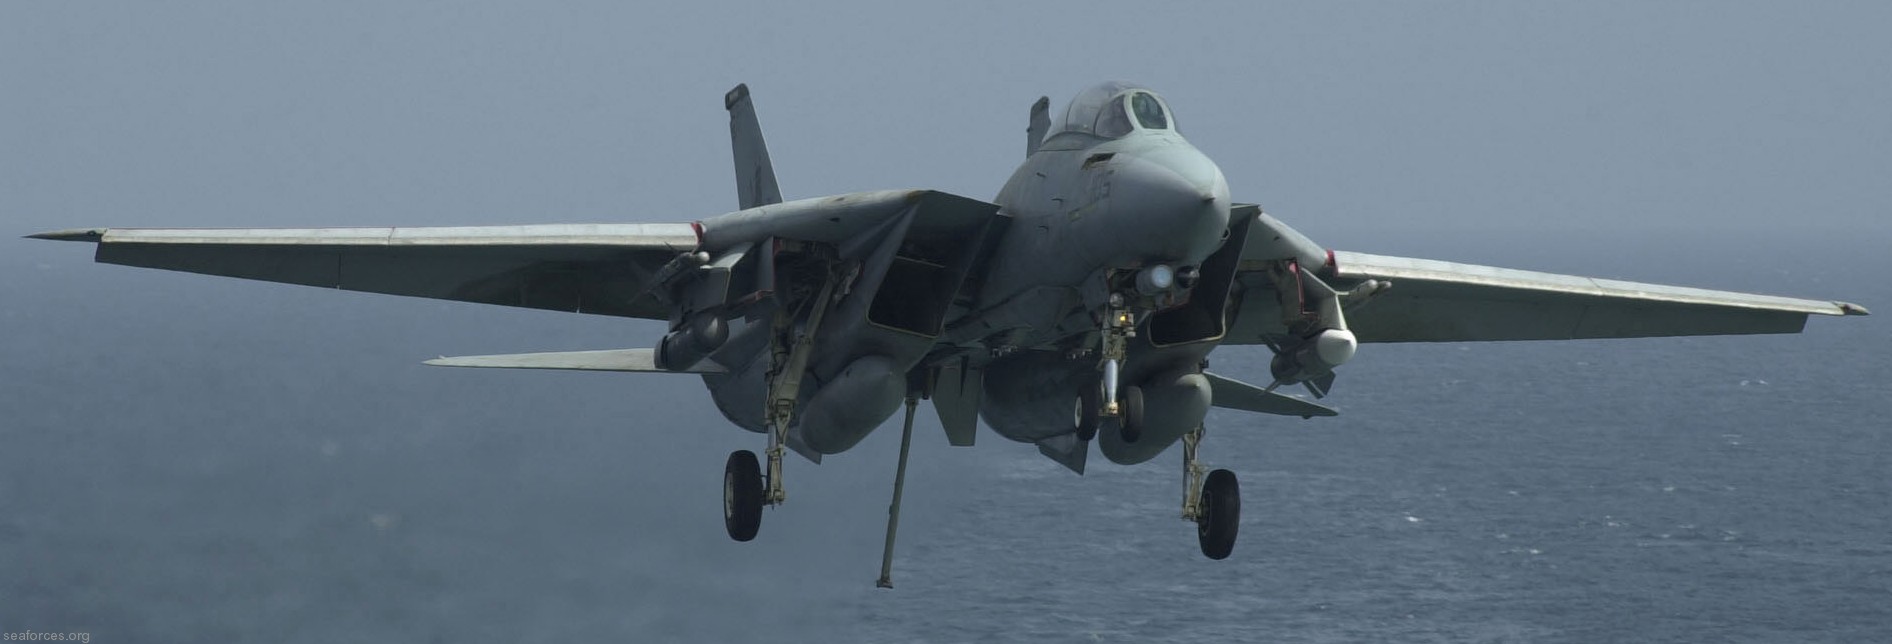 vf-213 black lions fighter squadron us navy f-14d tomcat carrier air wing cvw-11 uss carl vinson cvn-70 91